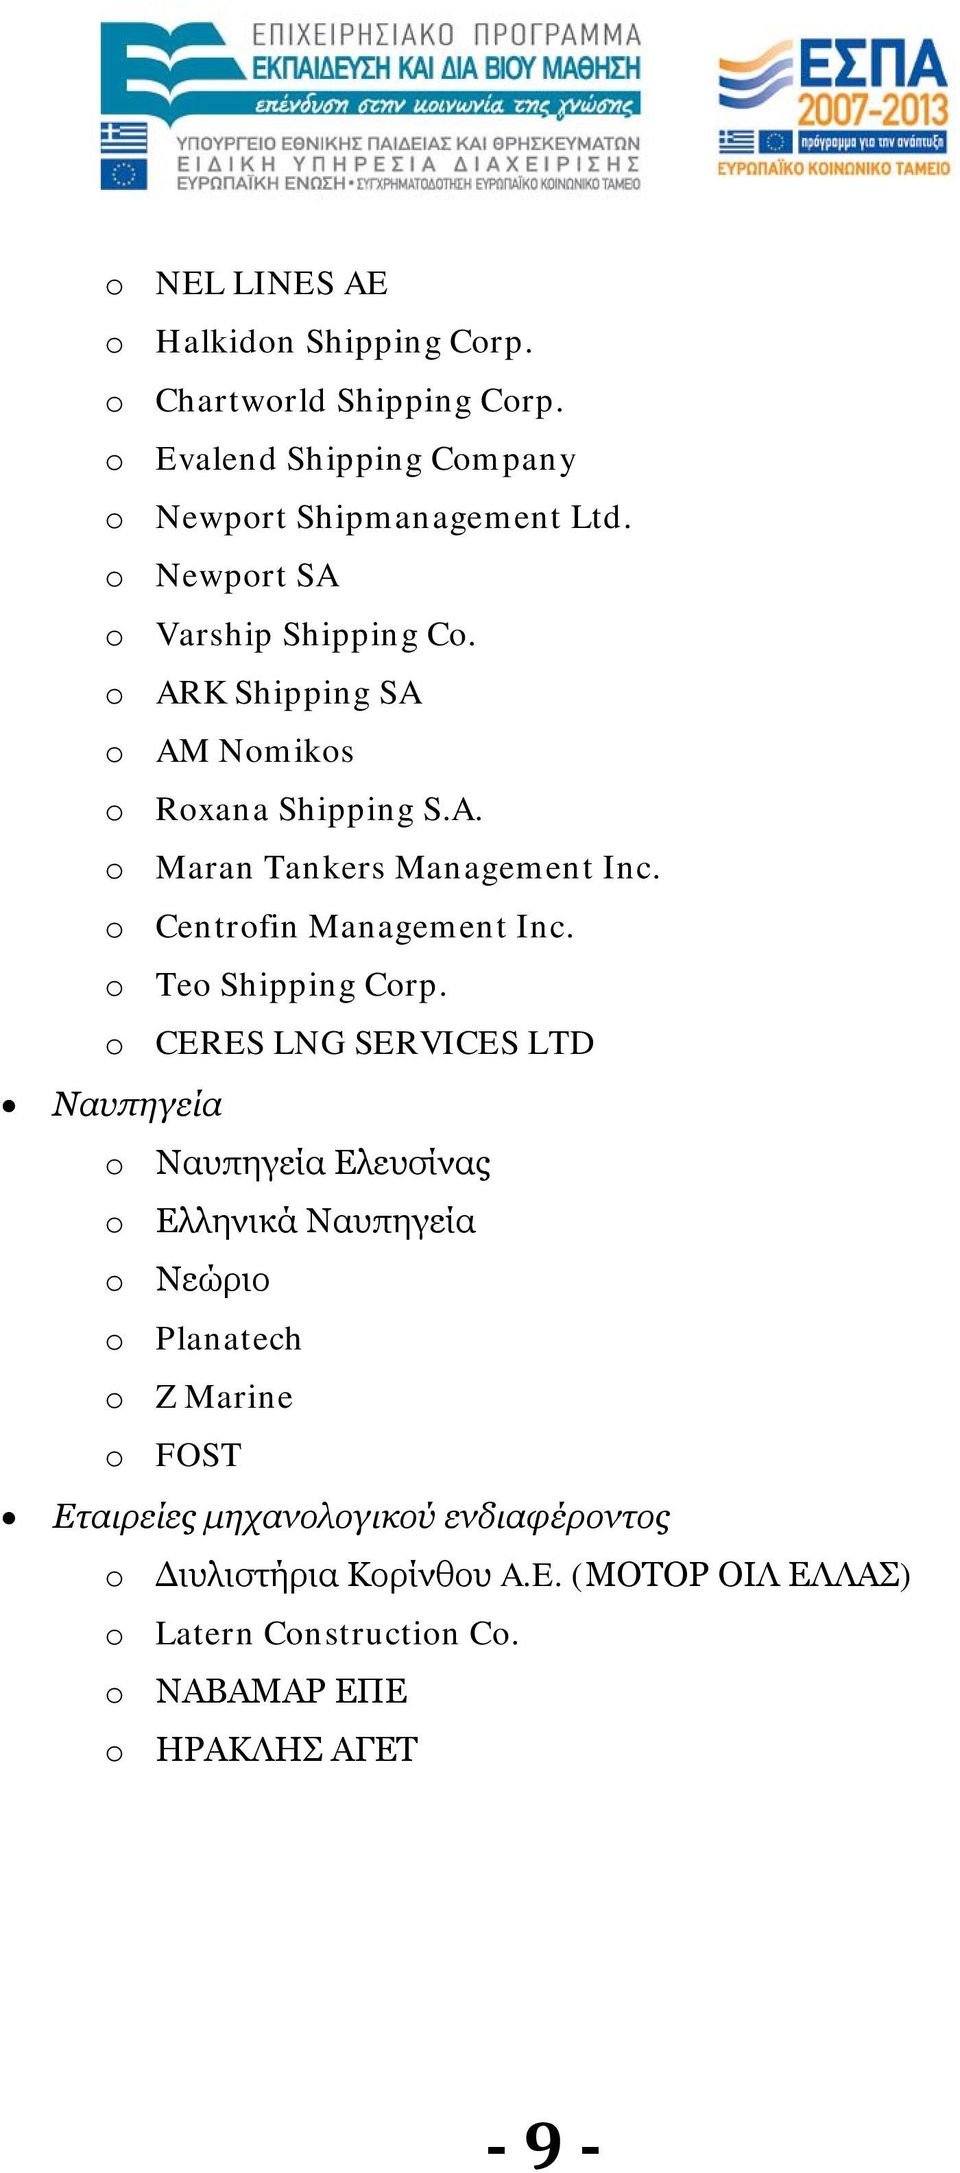 o Centrofin Management Inc. o Teo Shipping Corp.